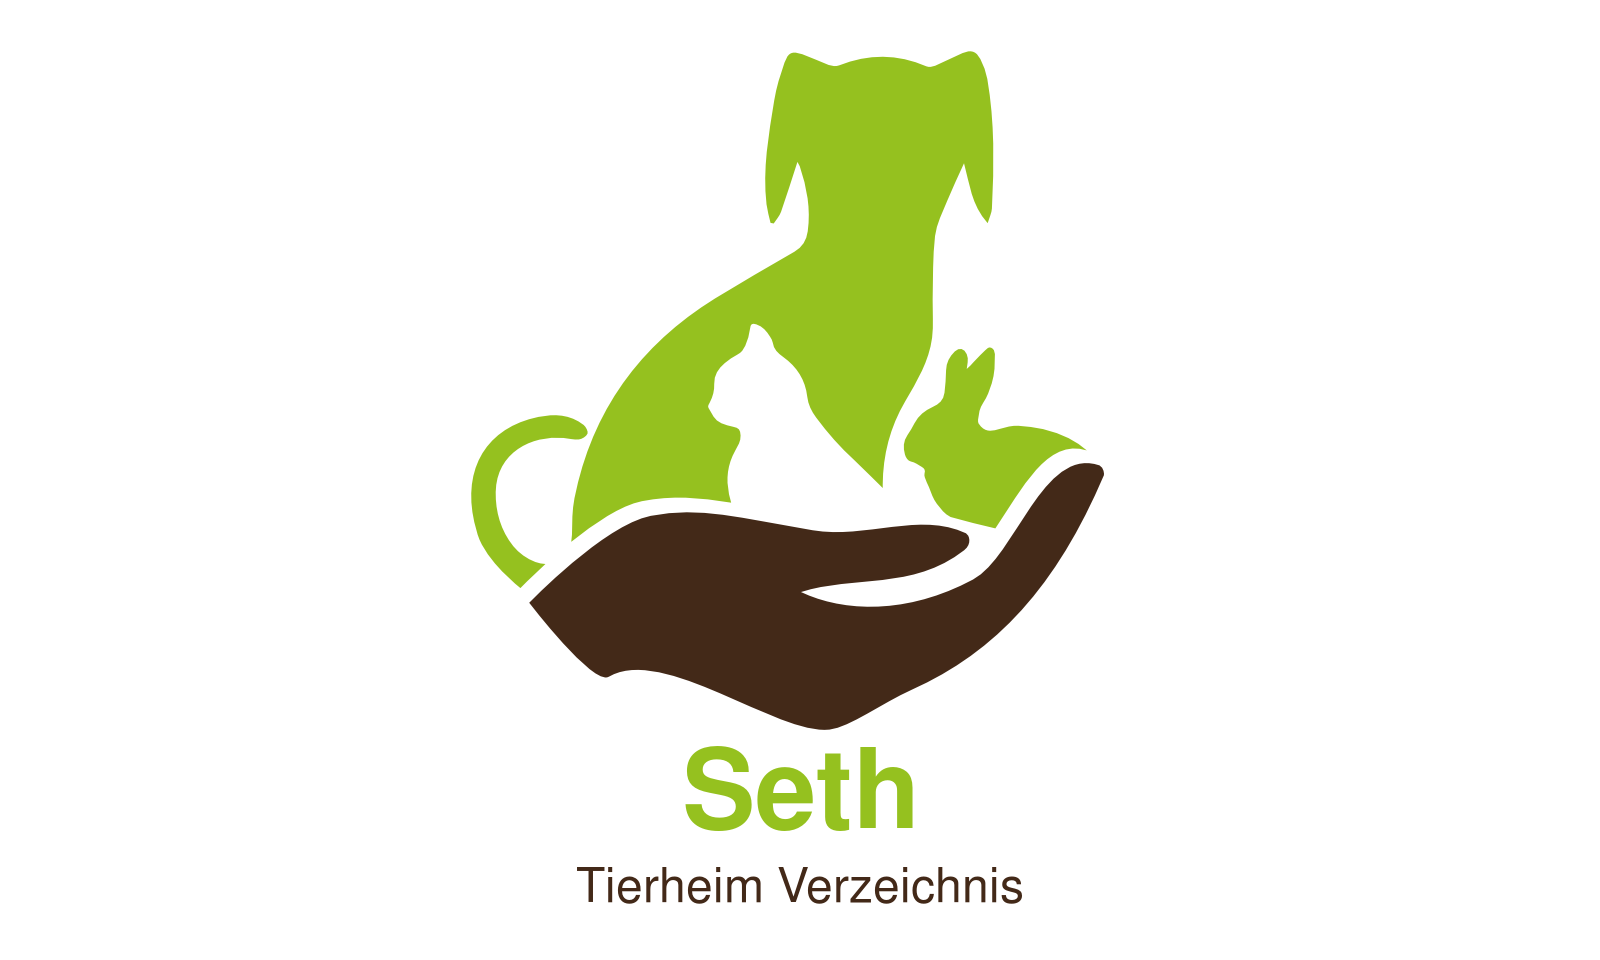 Tierheim Seth